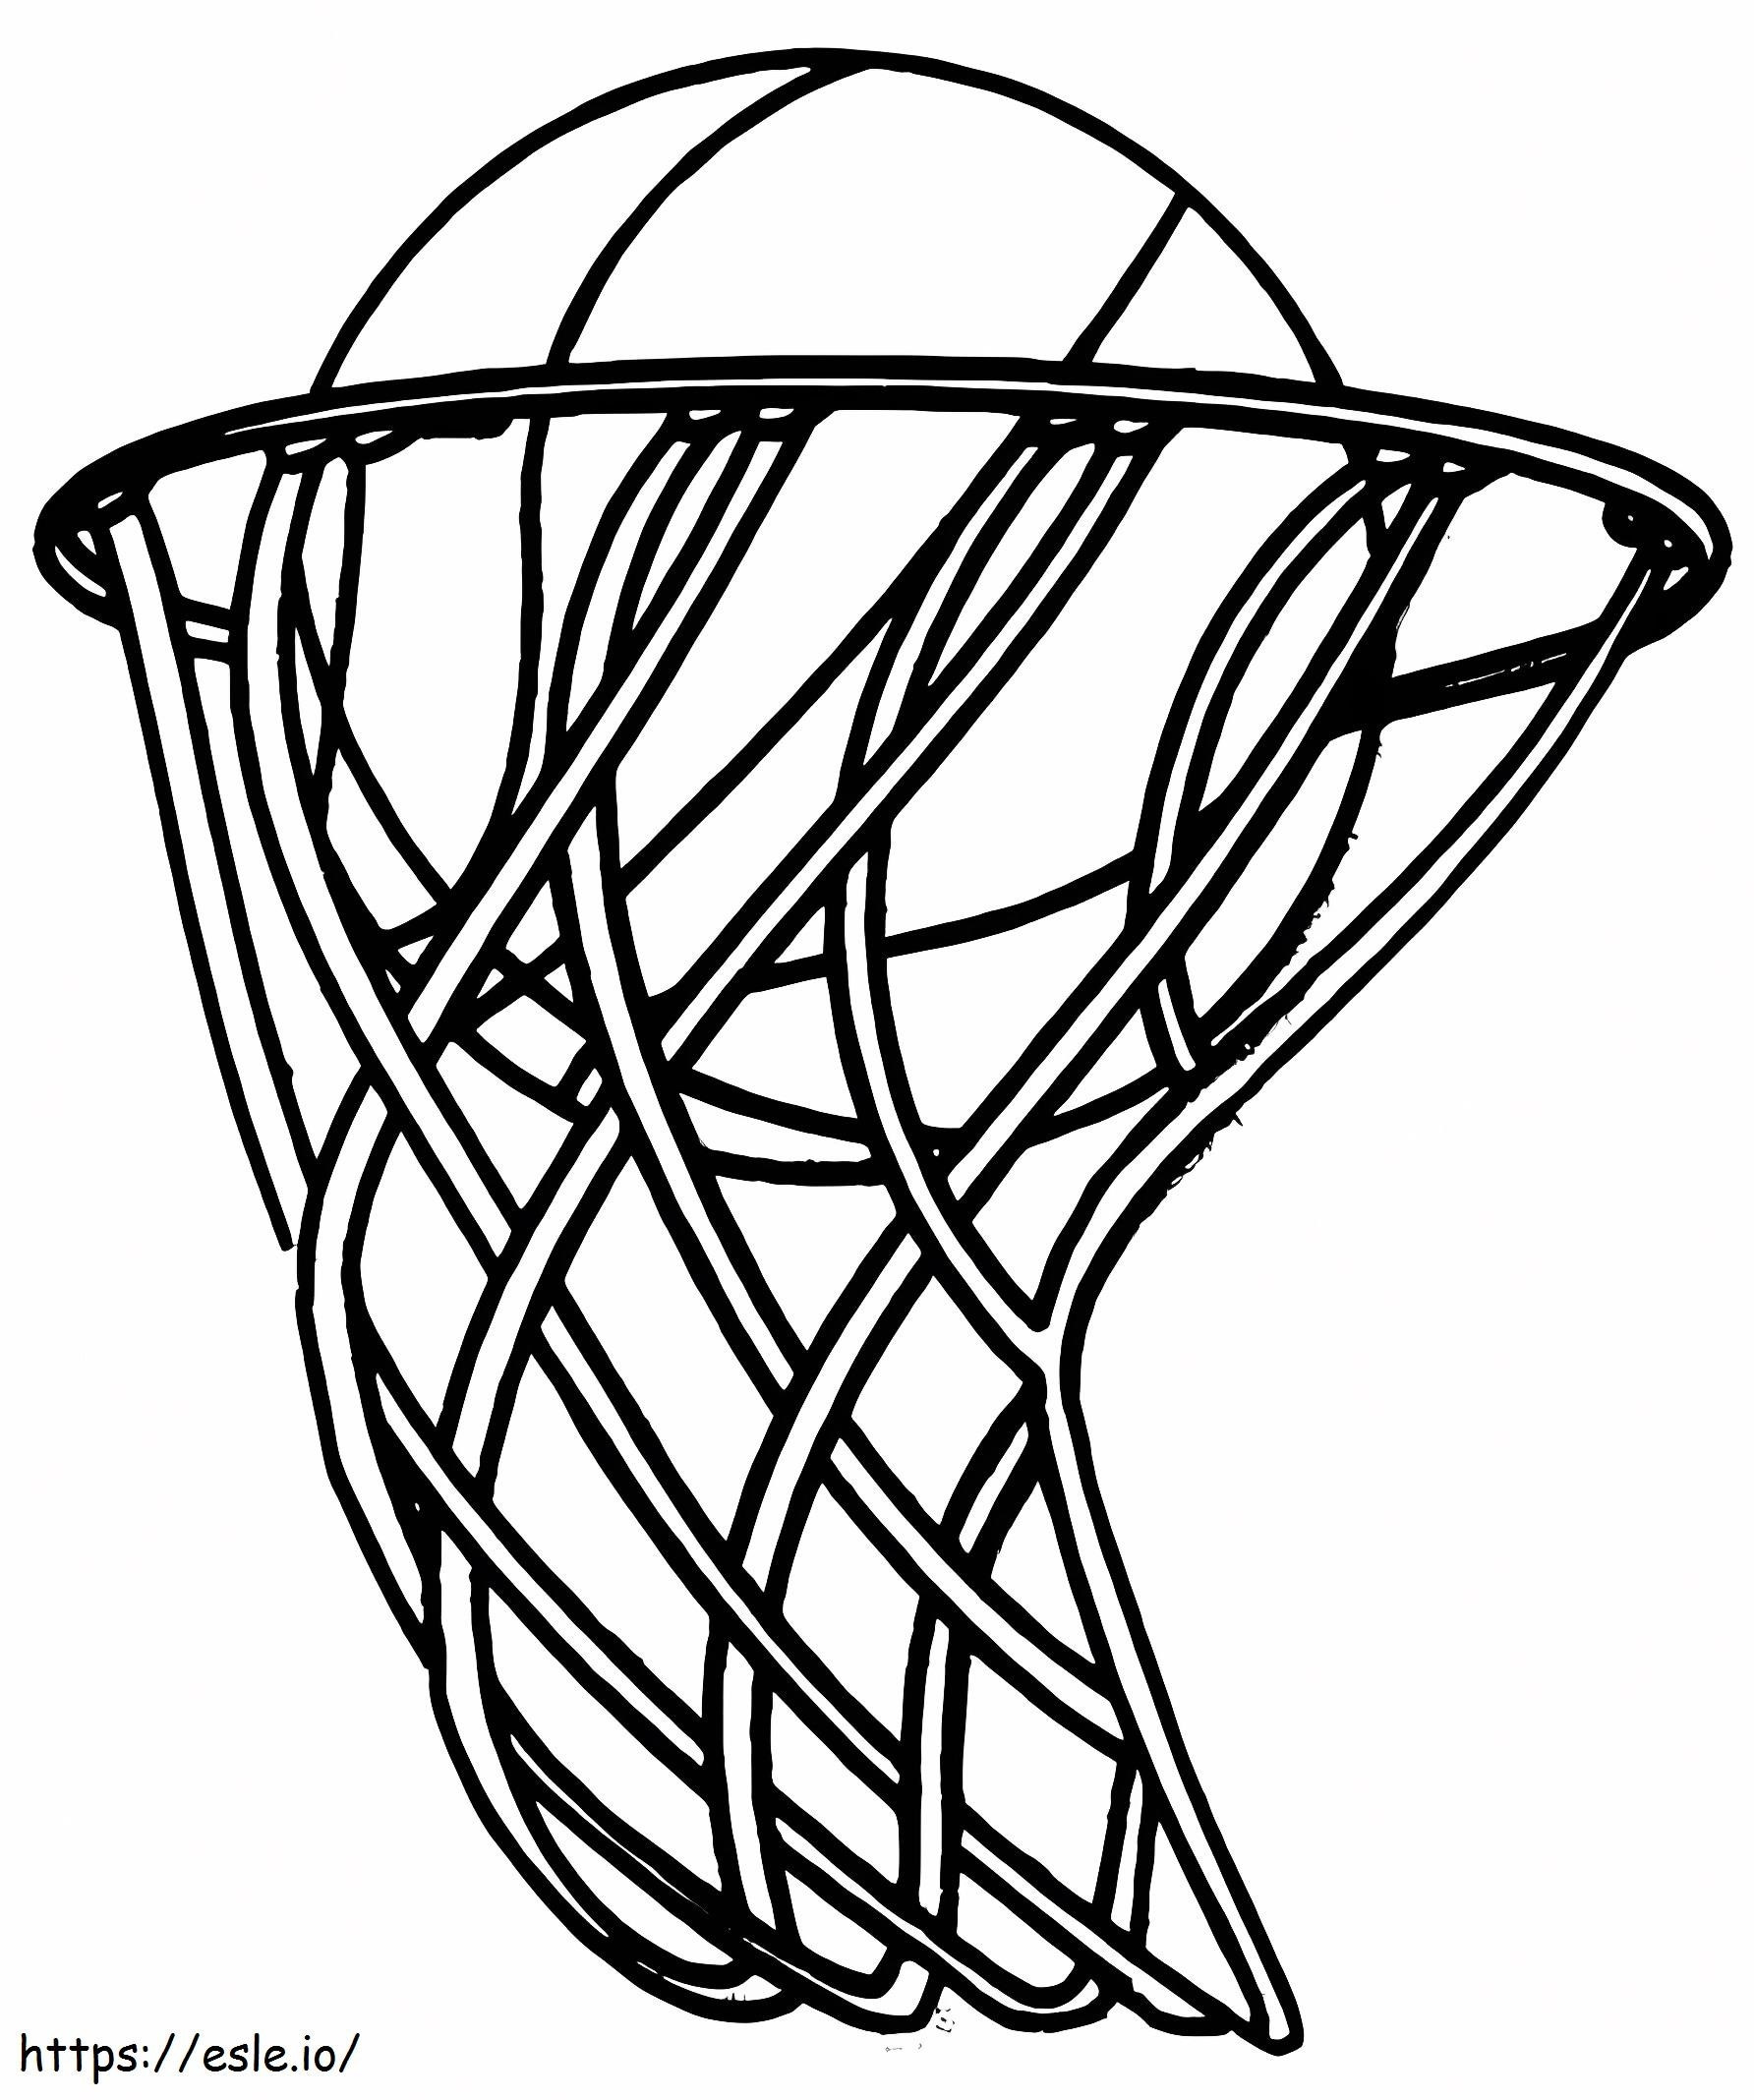 Basic Basketball 2 coloring page